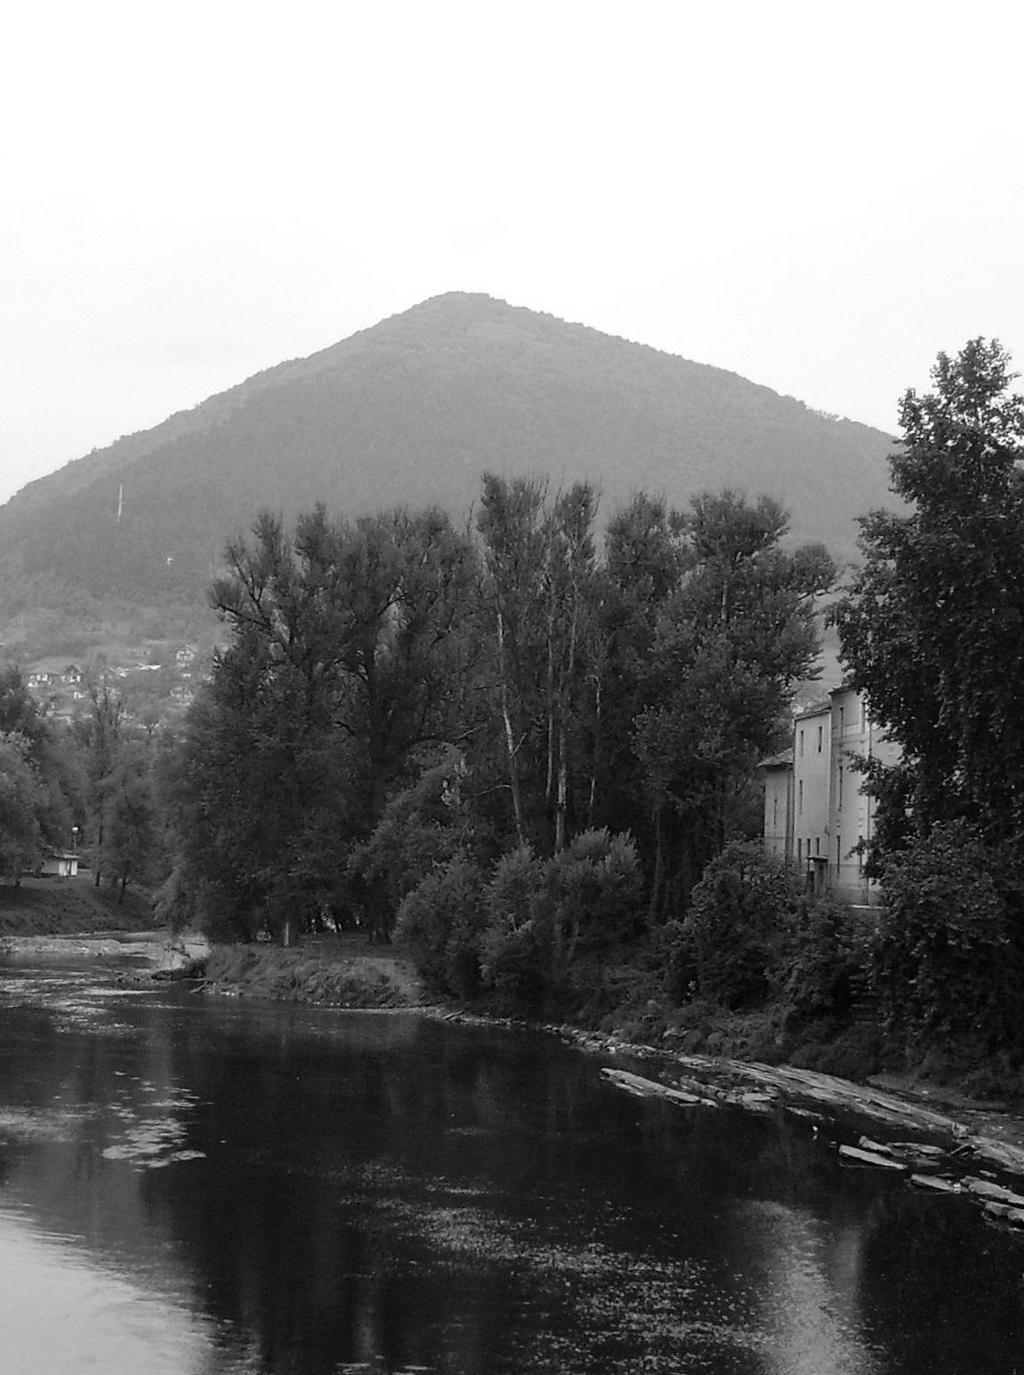 Visočica hill from the River Bosna in Visoko, Bosnia and